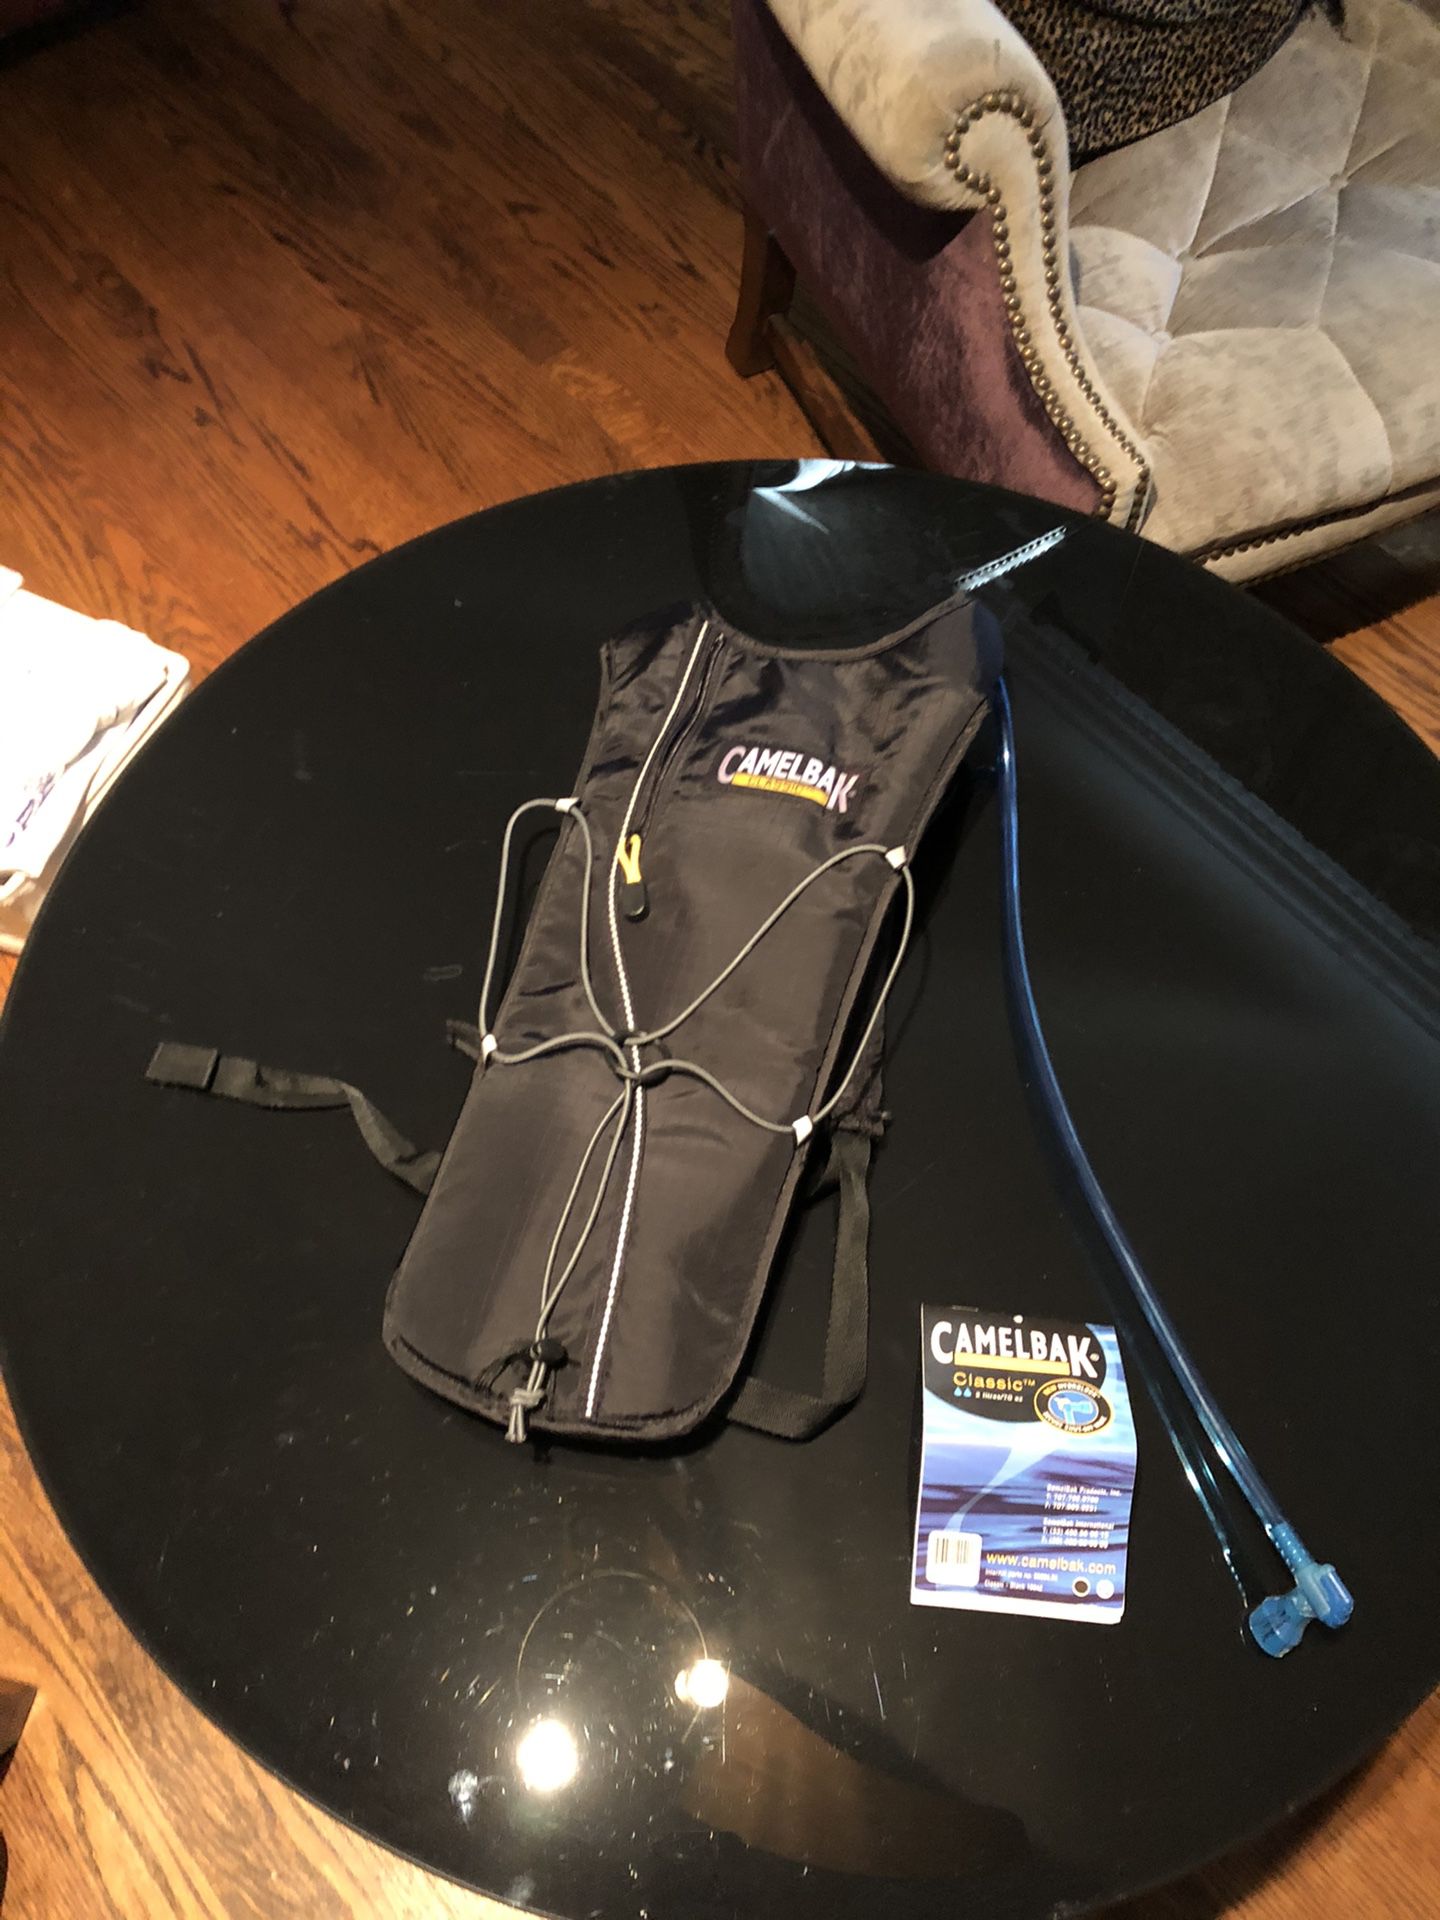 CamelBak hydration backpack